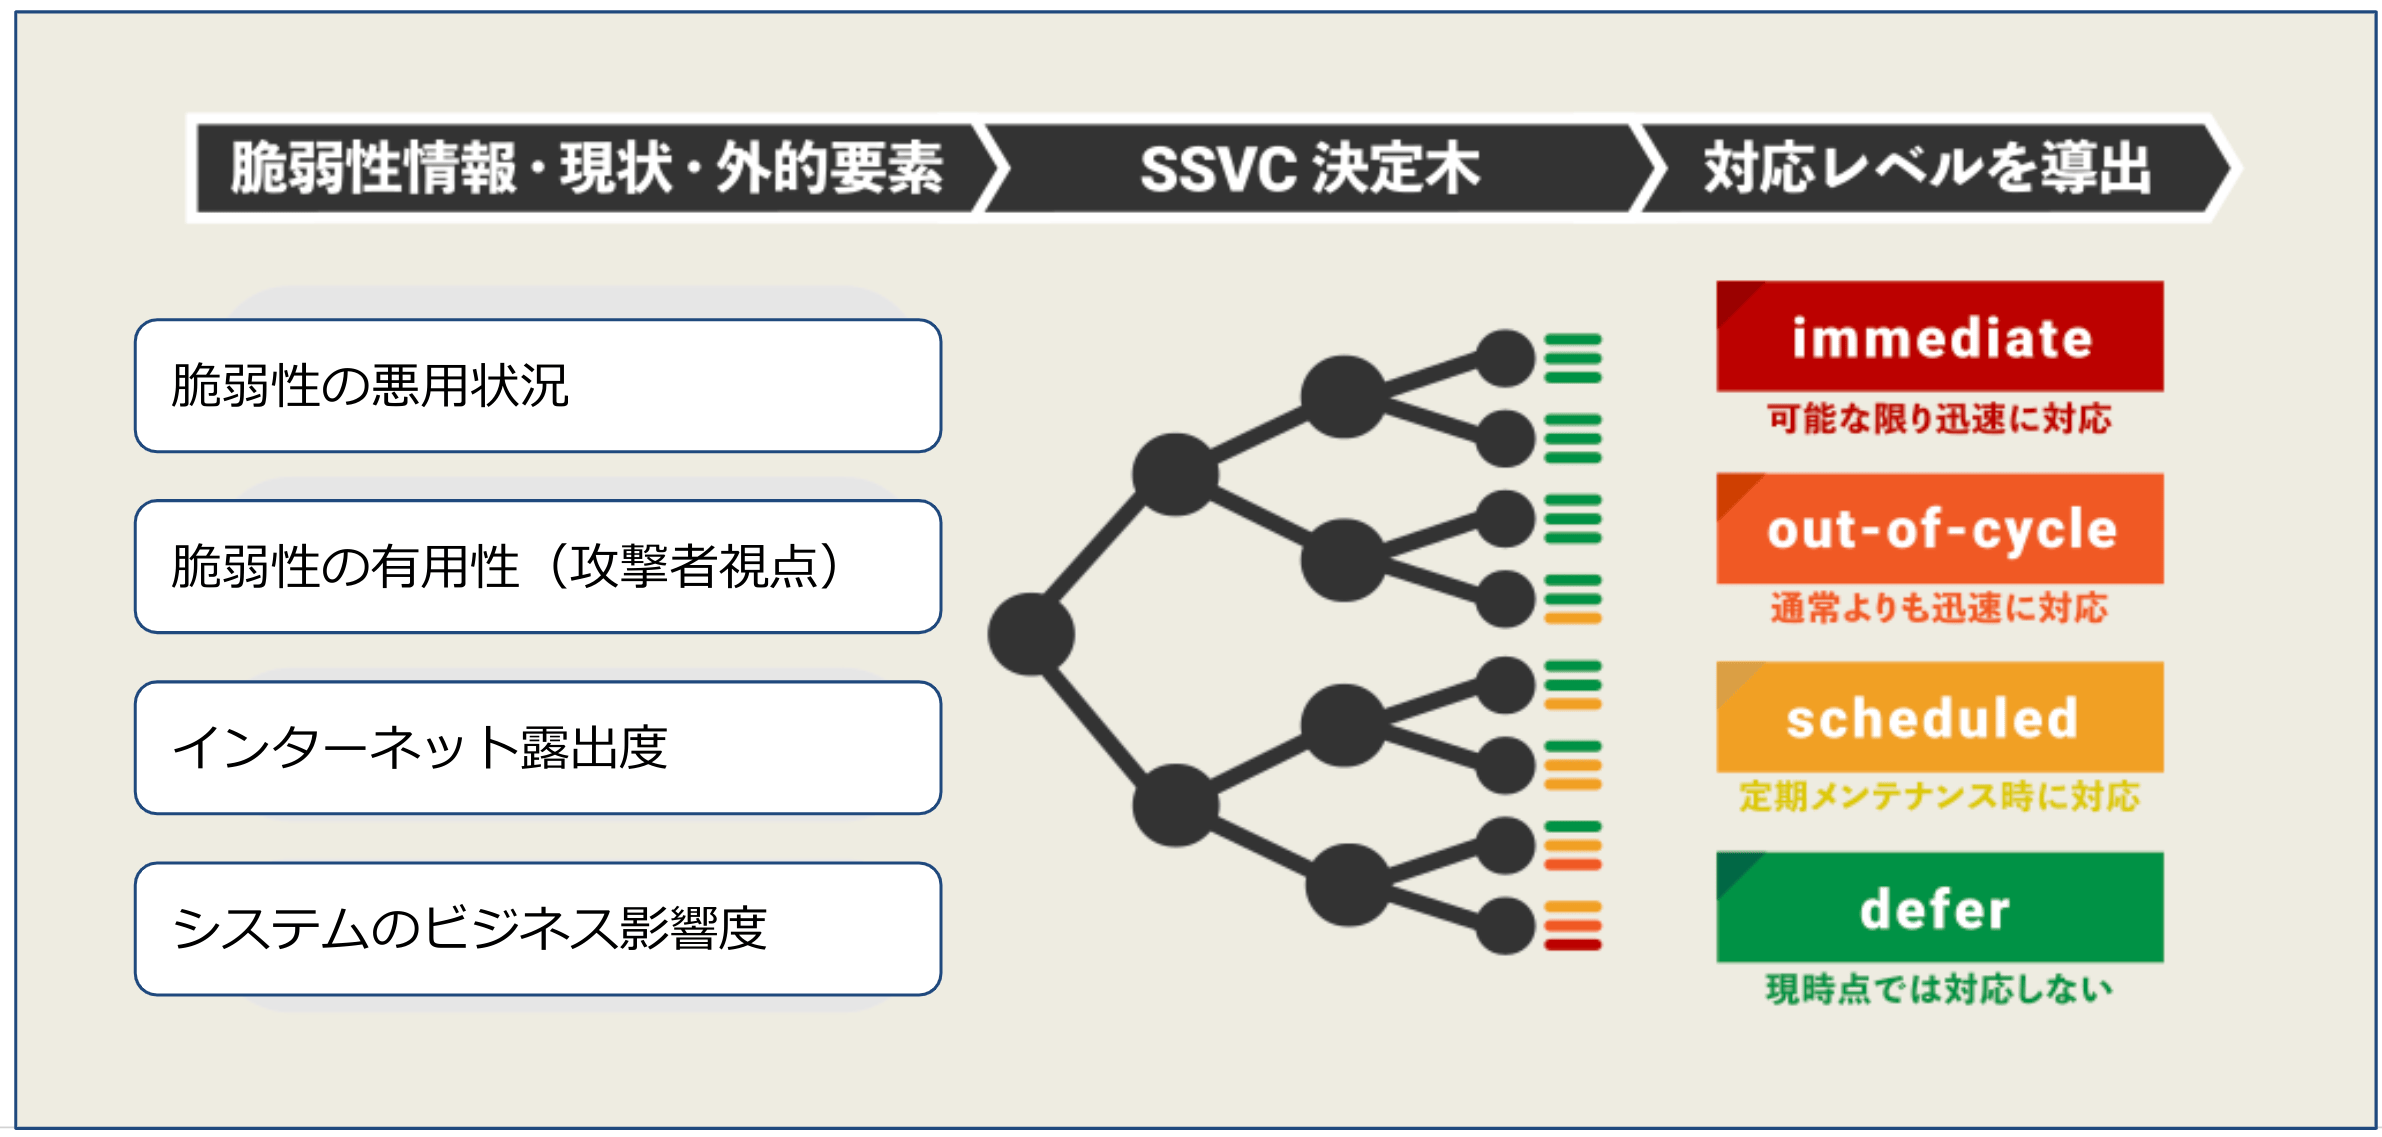 SSVC機能の概要